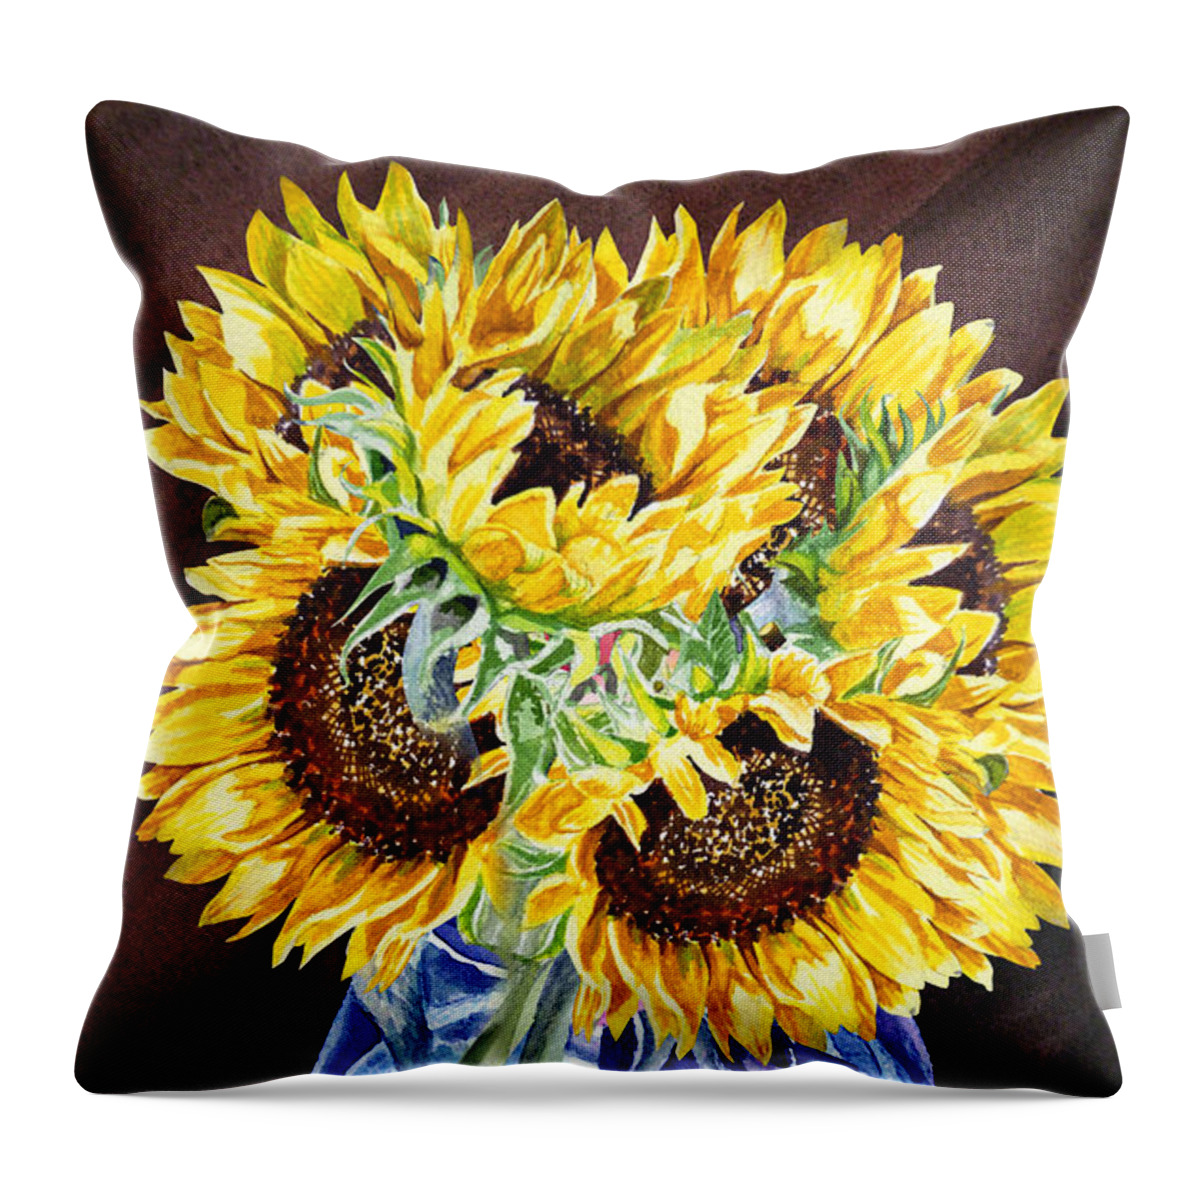 Sunflowers Throw Pillow featuring the painting A Bunch Of Sunflowers by Irina Sztukowski